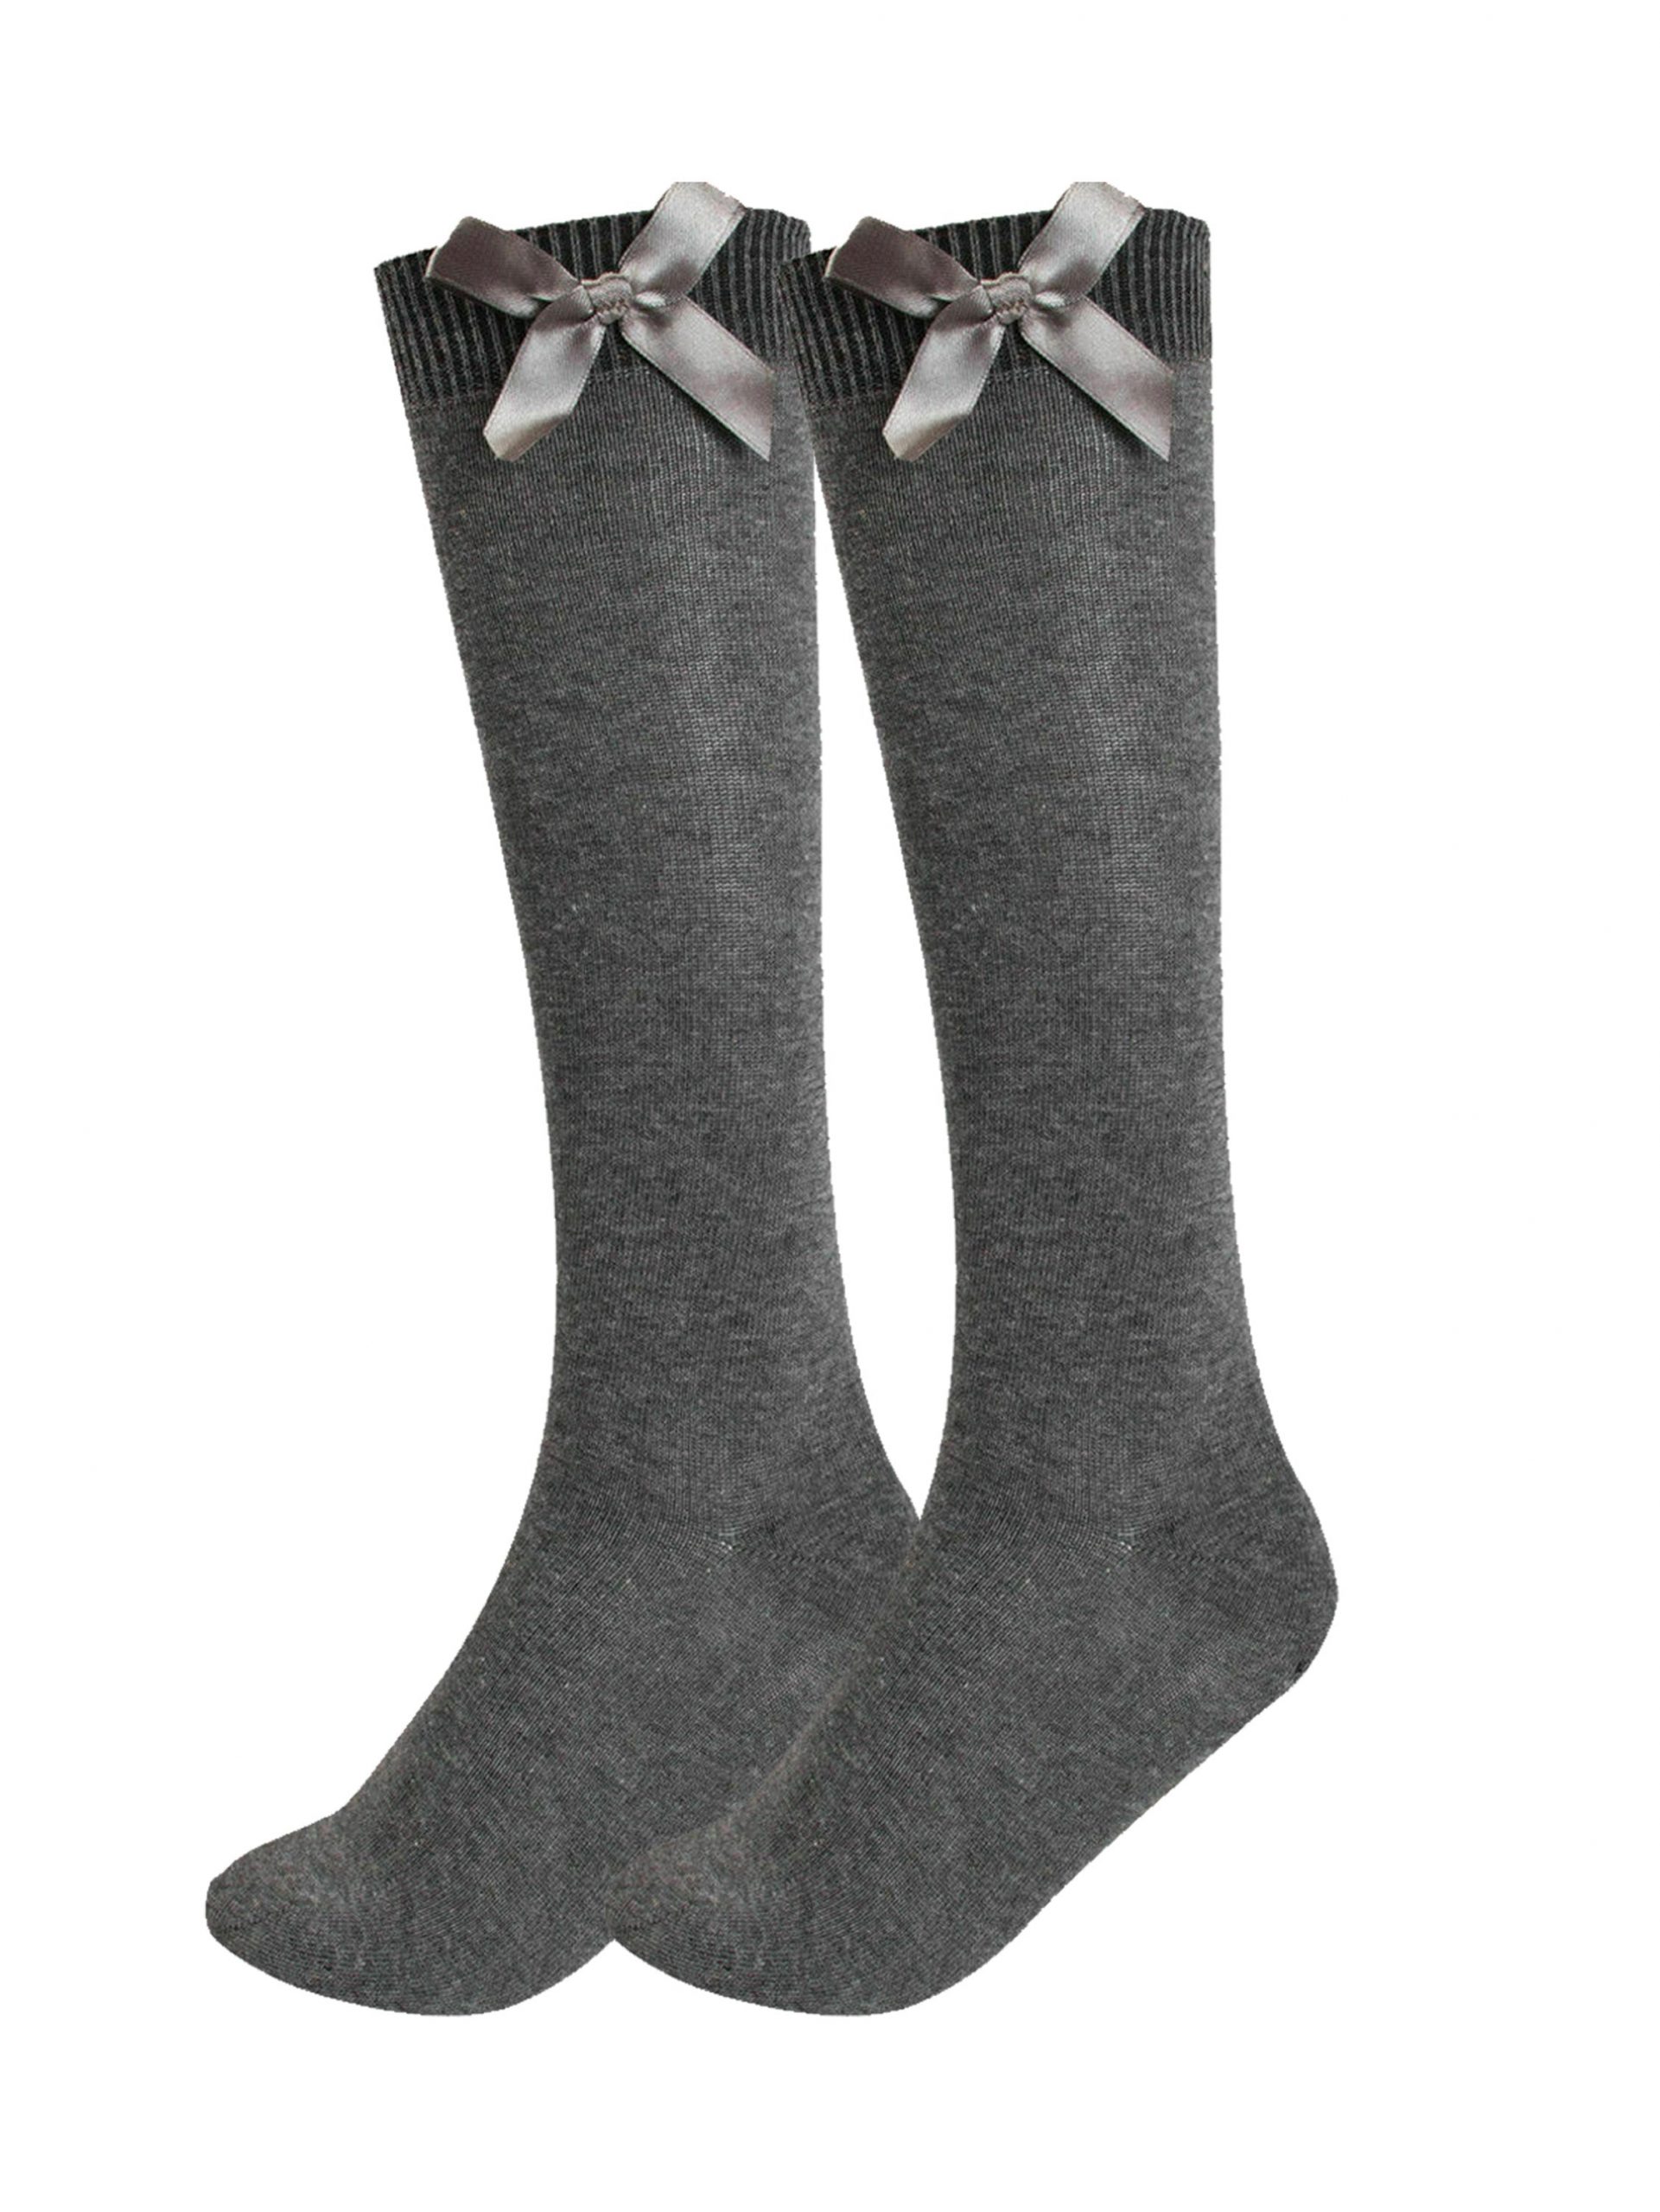 Accessories | Girls Knee High Long School Socks with Satin Bow - Grey ...